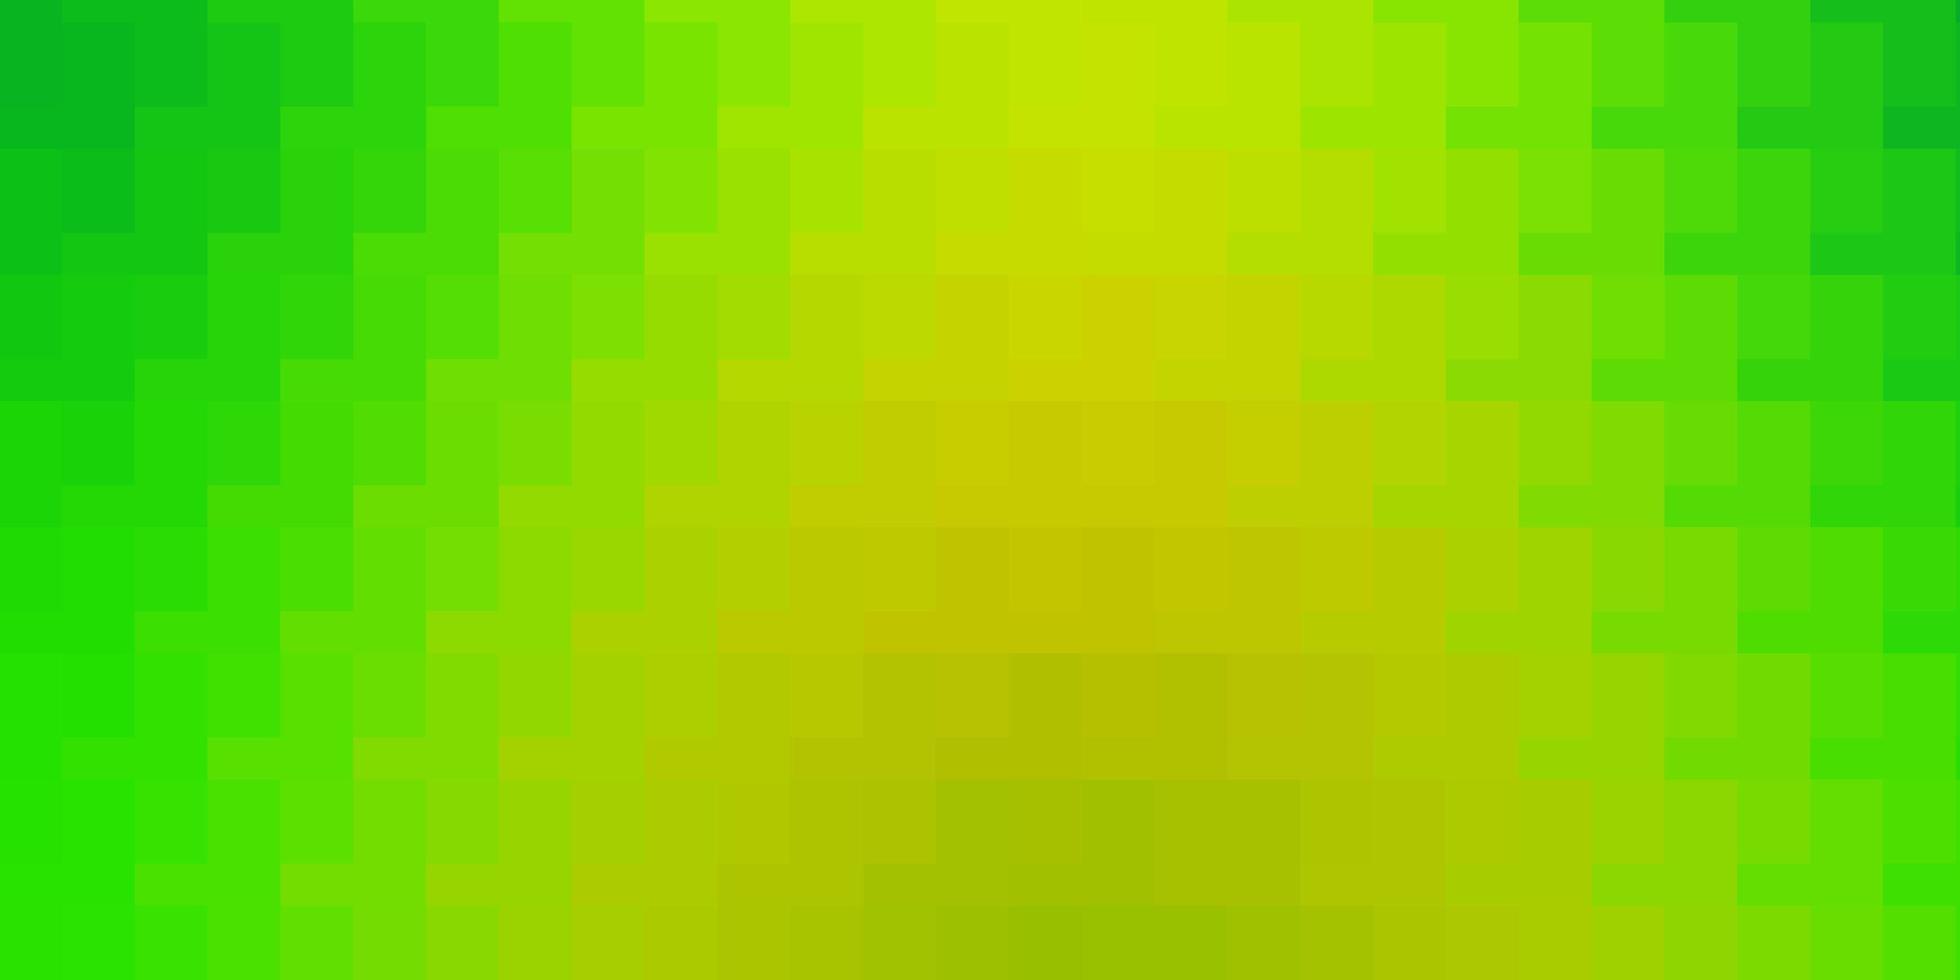 textura de vector amarillo verde claro en estilo rectangular diseño moderno con rectángulos en patrón de estilo abstracto para folletos de folletos de negocios